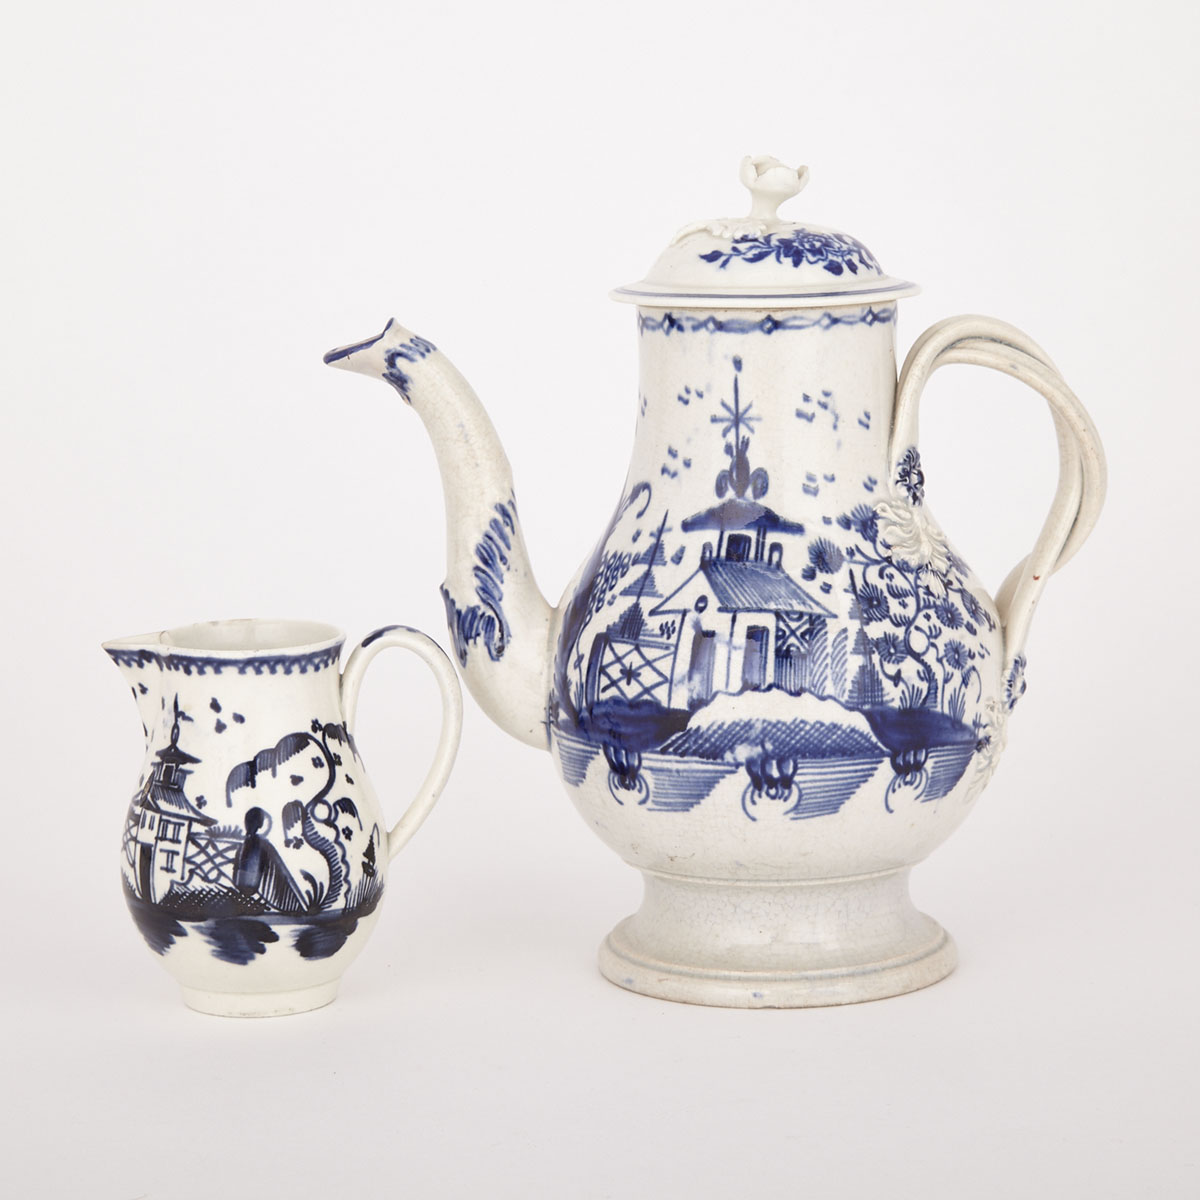 English Pearlware Coffee Pot and Cream Jug, late 18th century